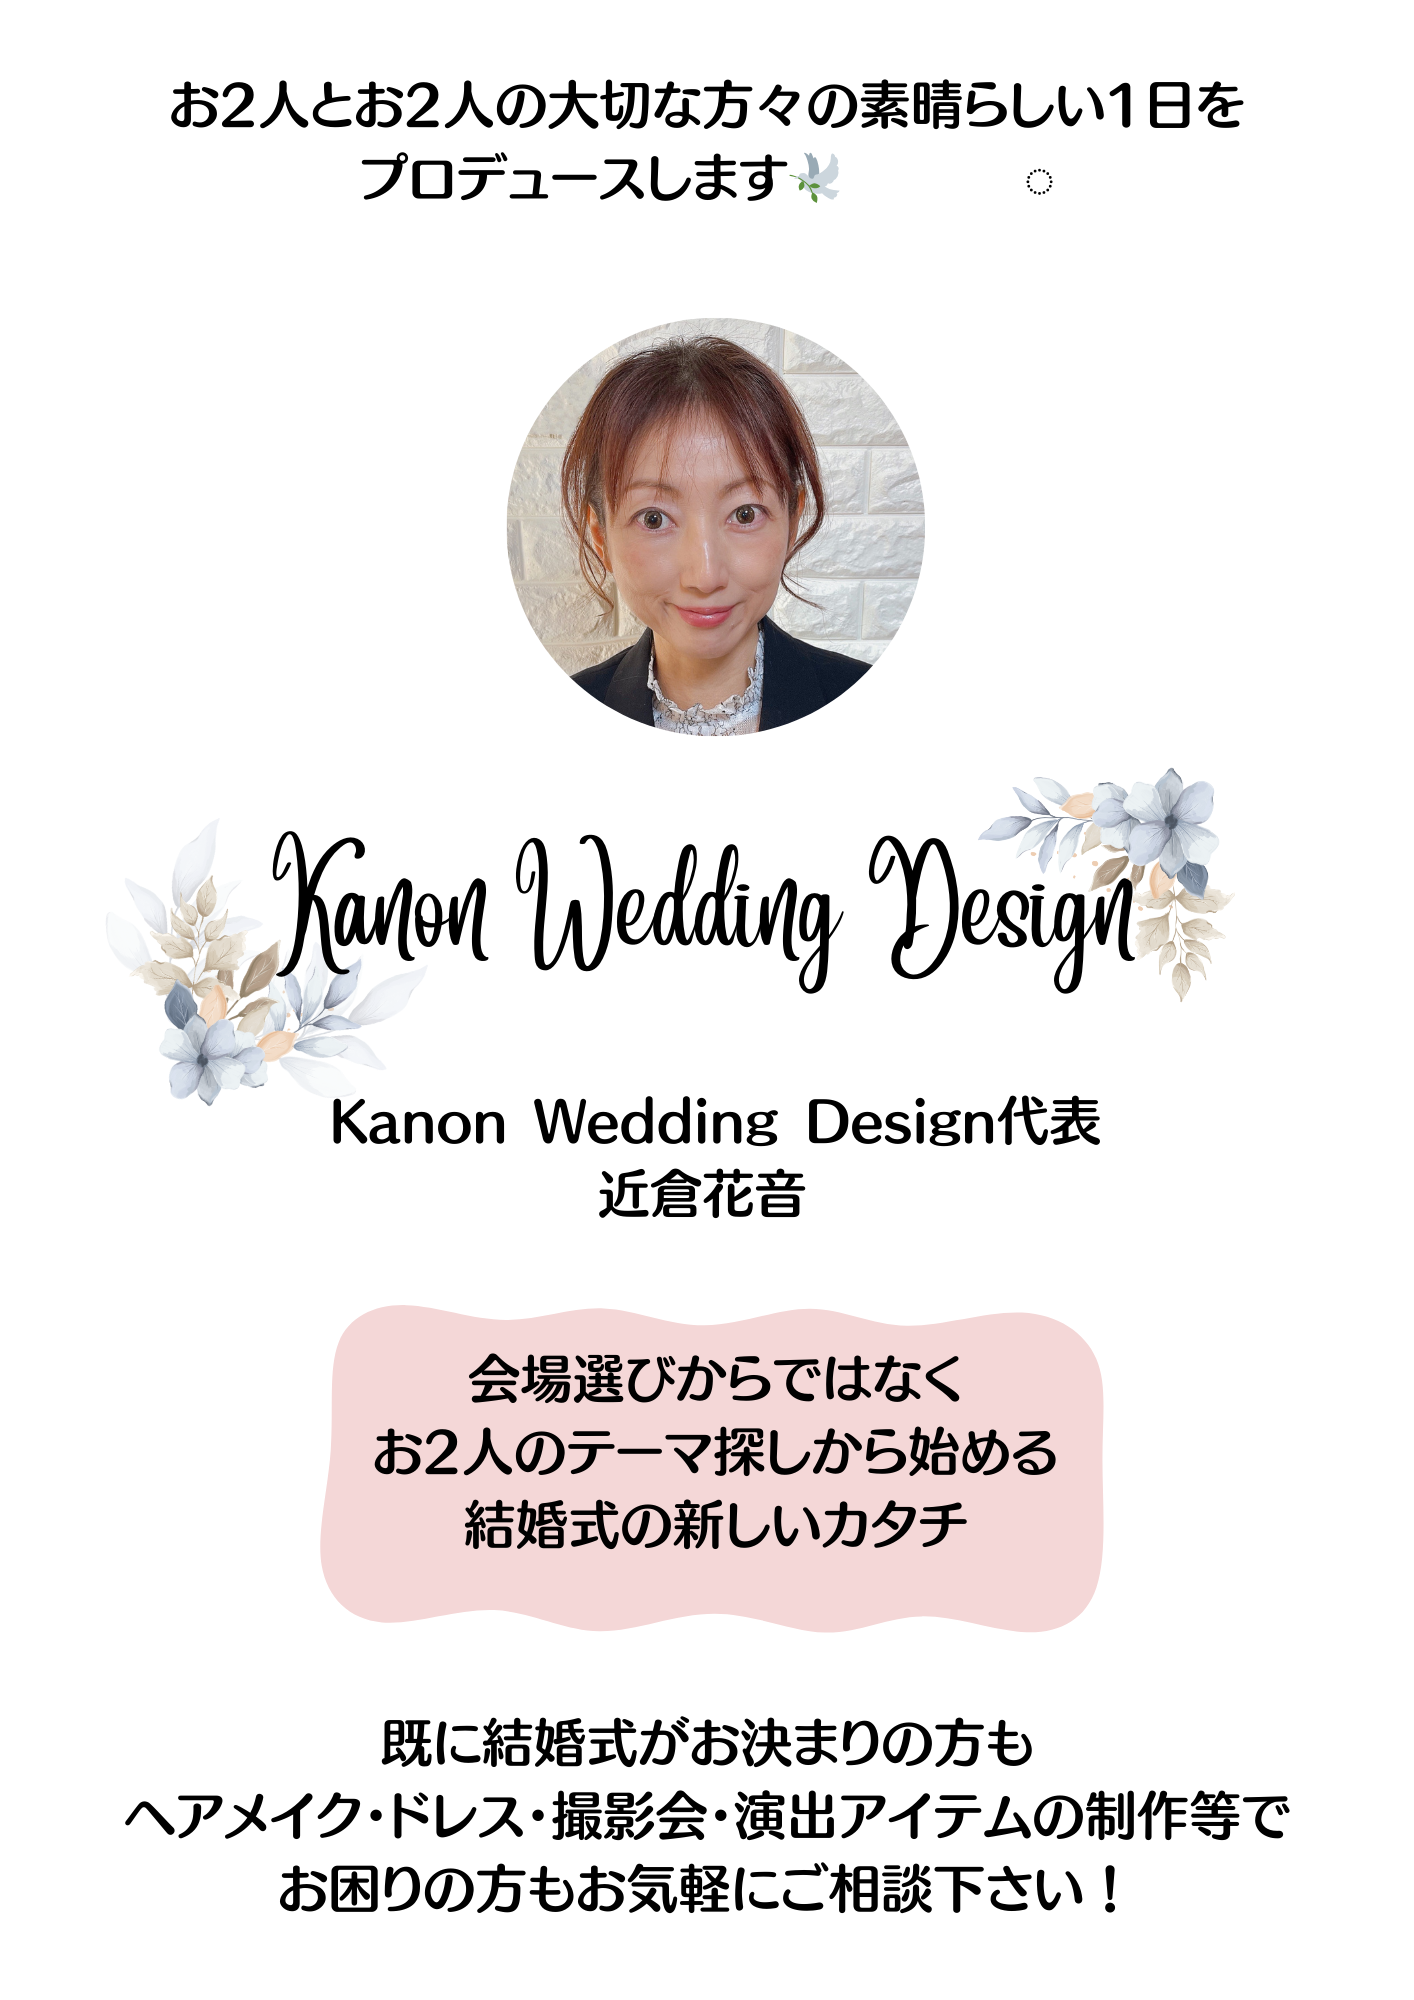 Kanon Wedding Design の紹介